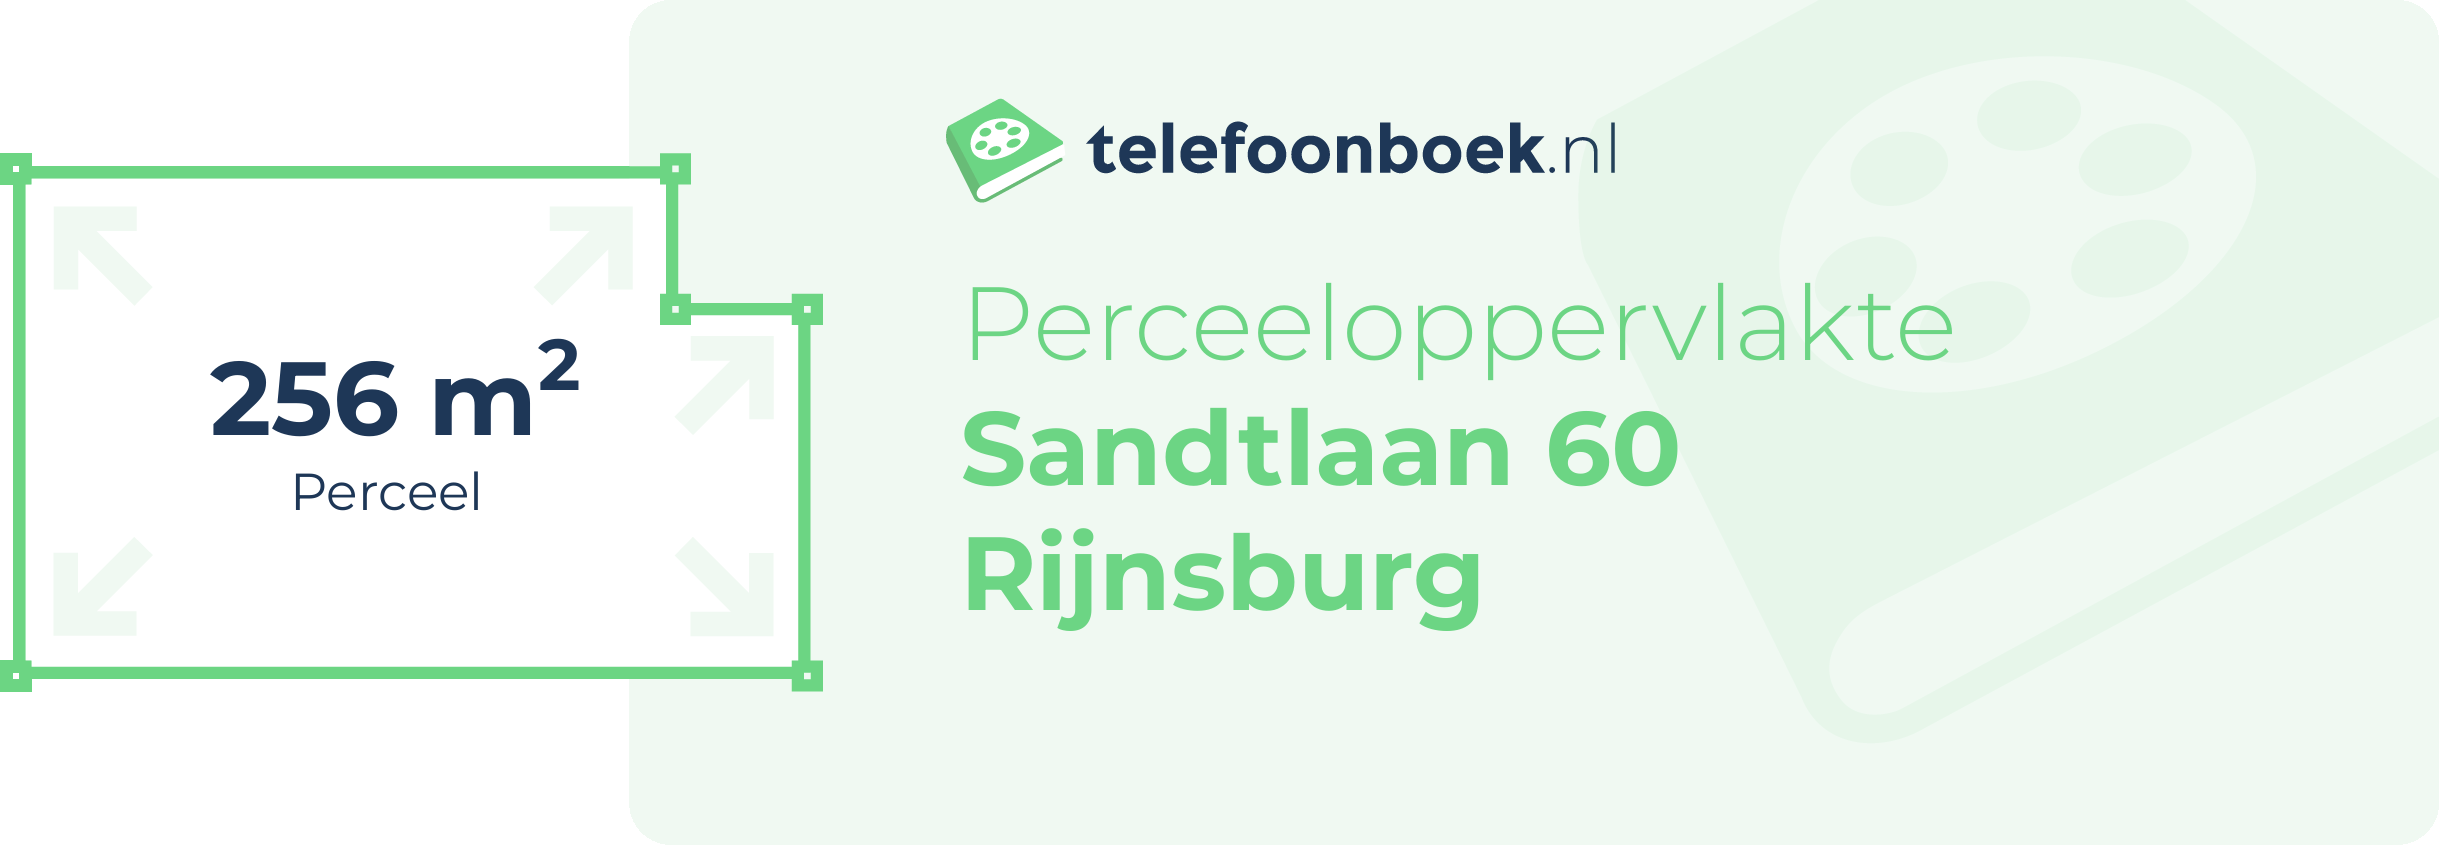 Perceeloppervlakte Sandtlaan 60 Rijnsburg